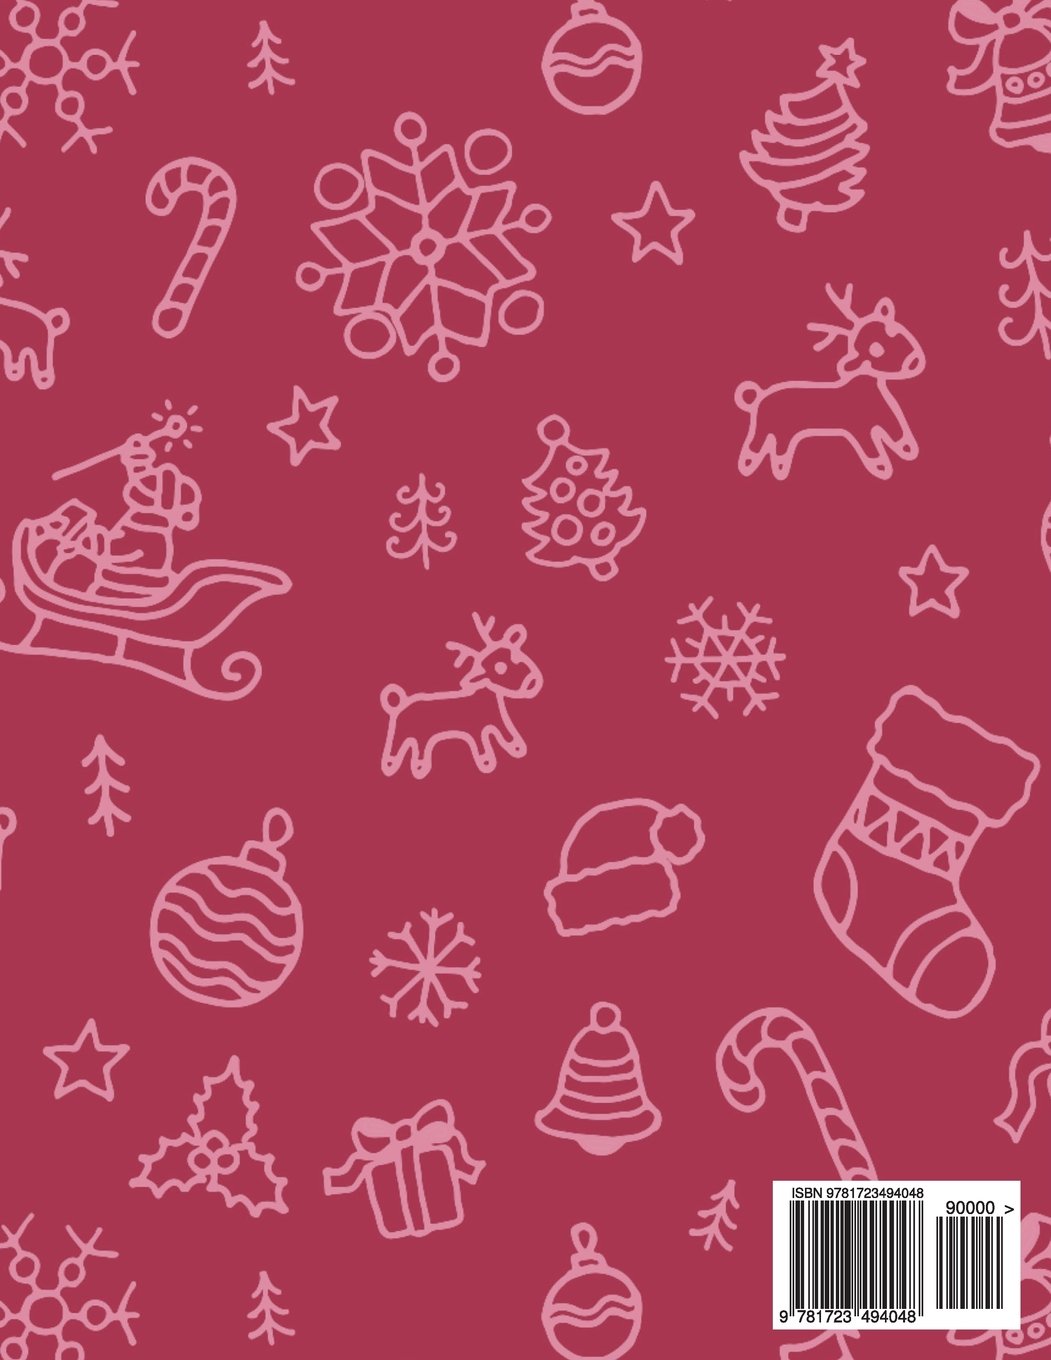 Blank Christmas - HD Wallpaper 